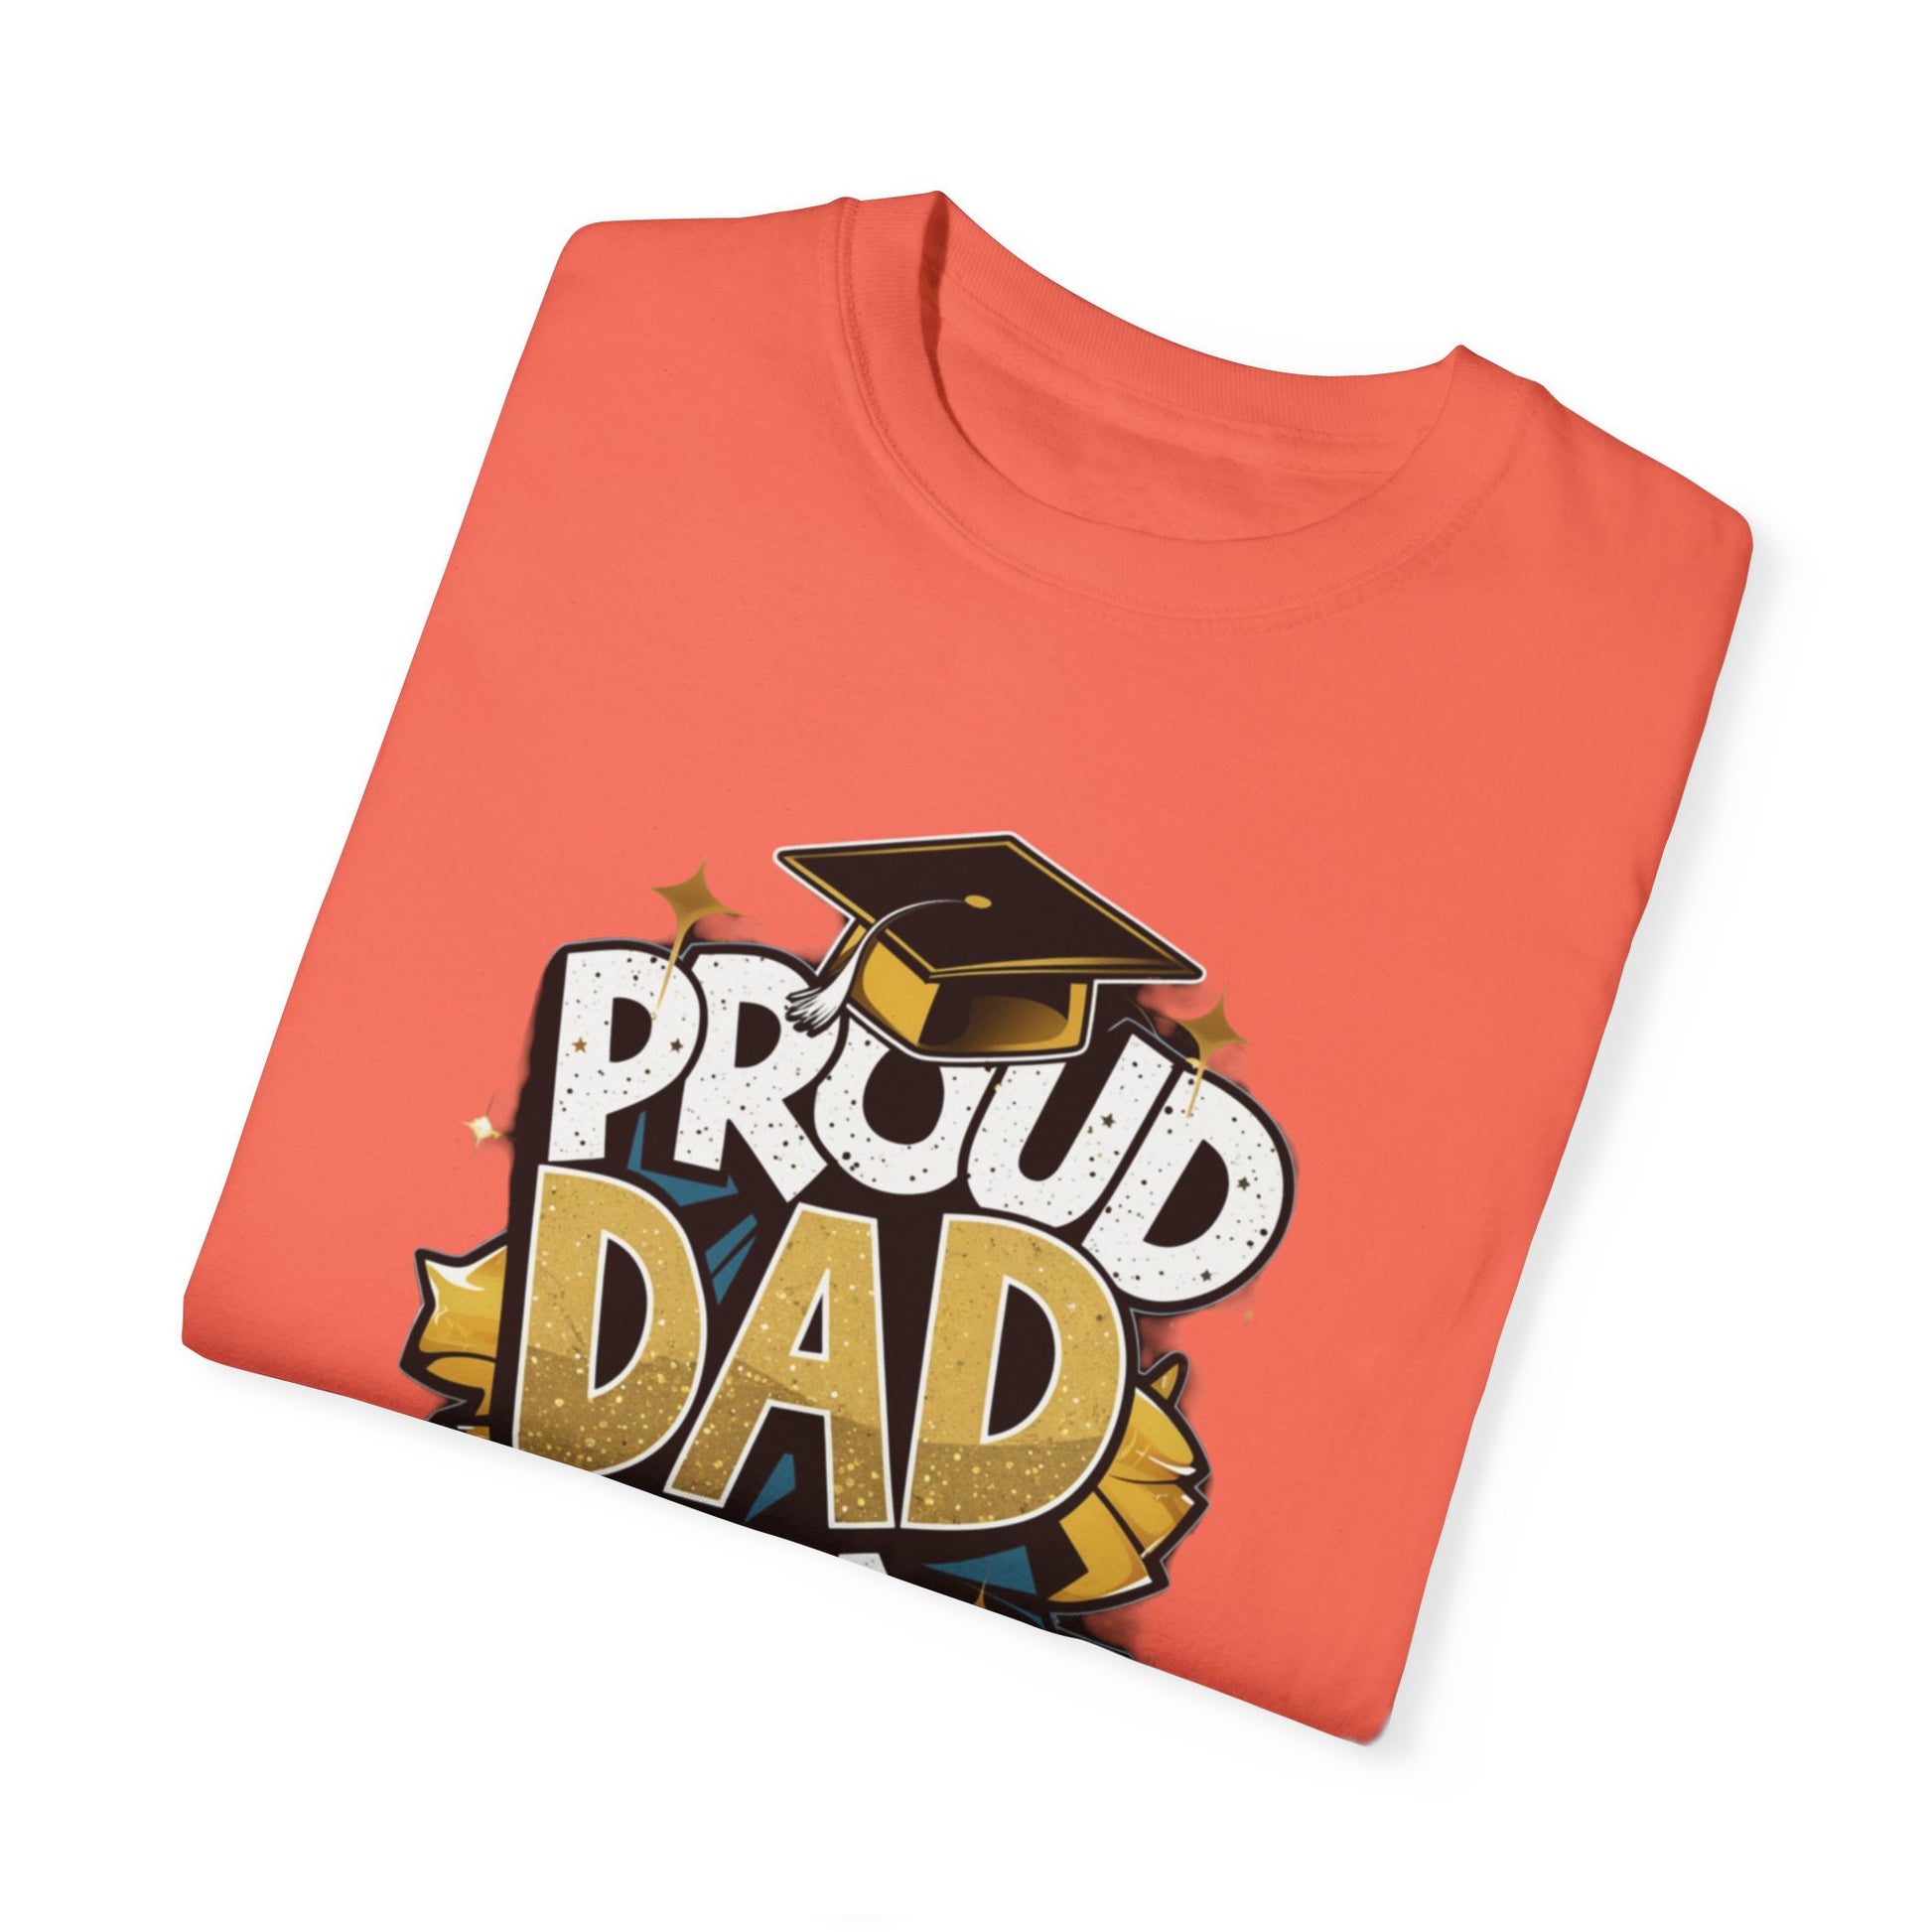 Proud Dad of a 2024 Graduate Unisex Garment-dyed T-shirt Cotton Funny Humorous Graphic Soft Premium Unisex Men Women Bright Salmon T-shirt Birthday Gift-32